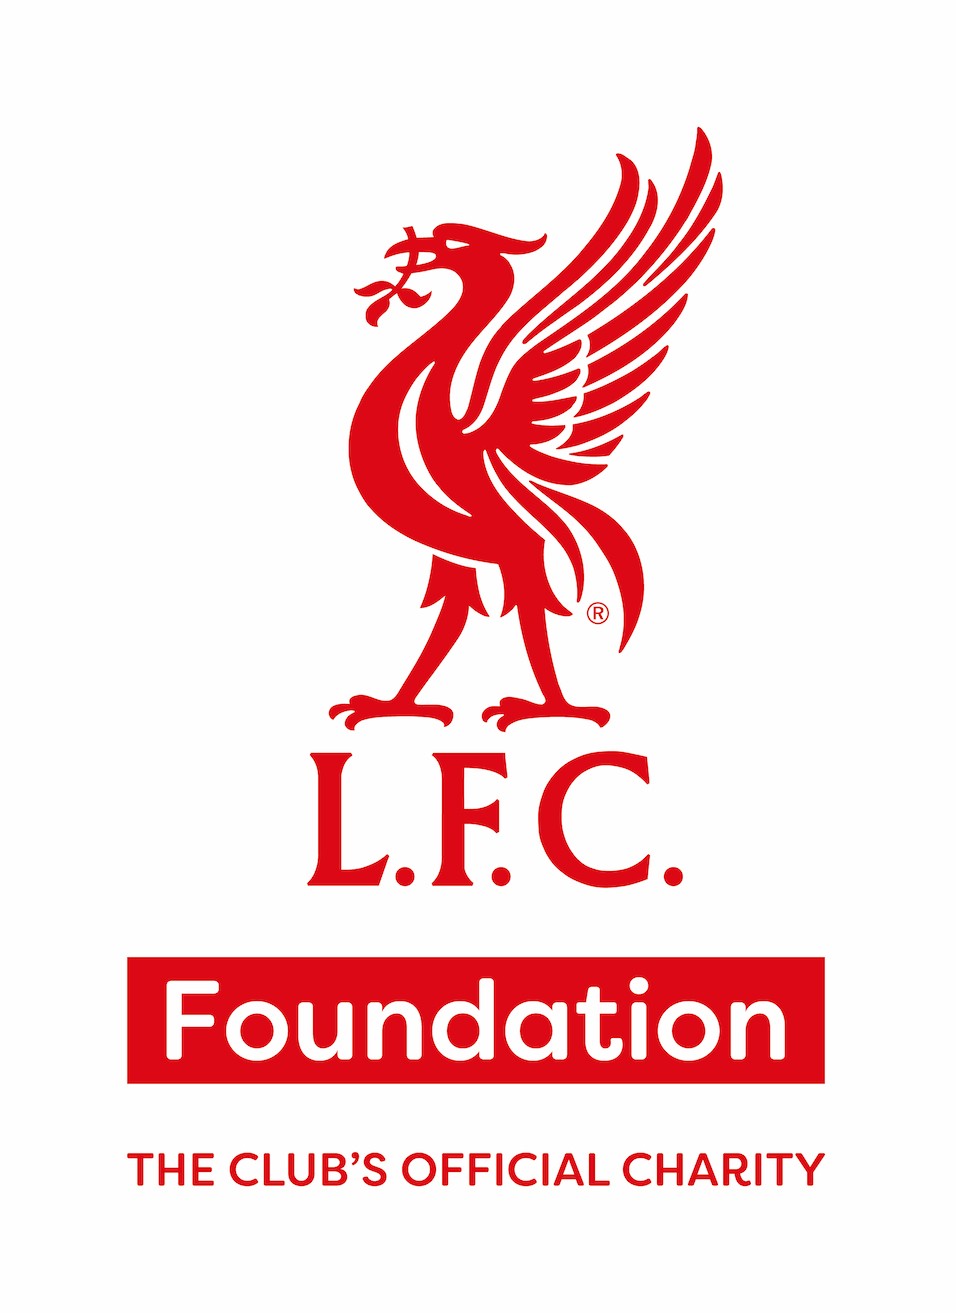 Liverpool FC Foundation